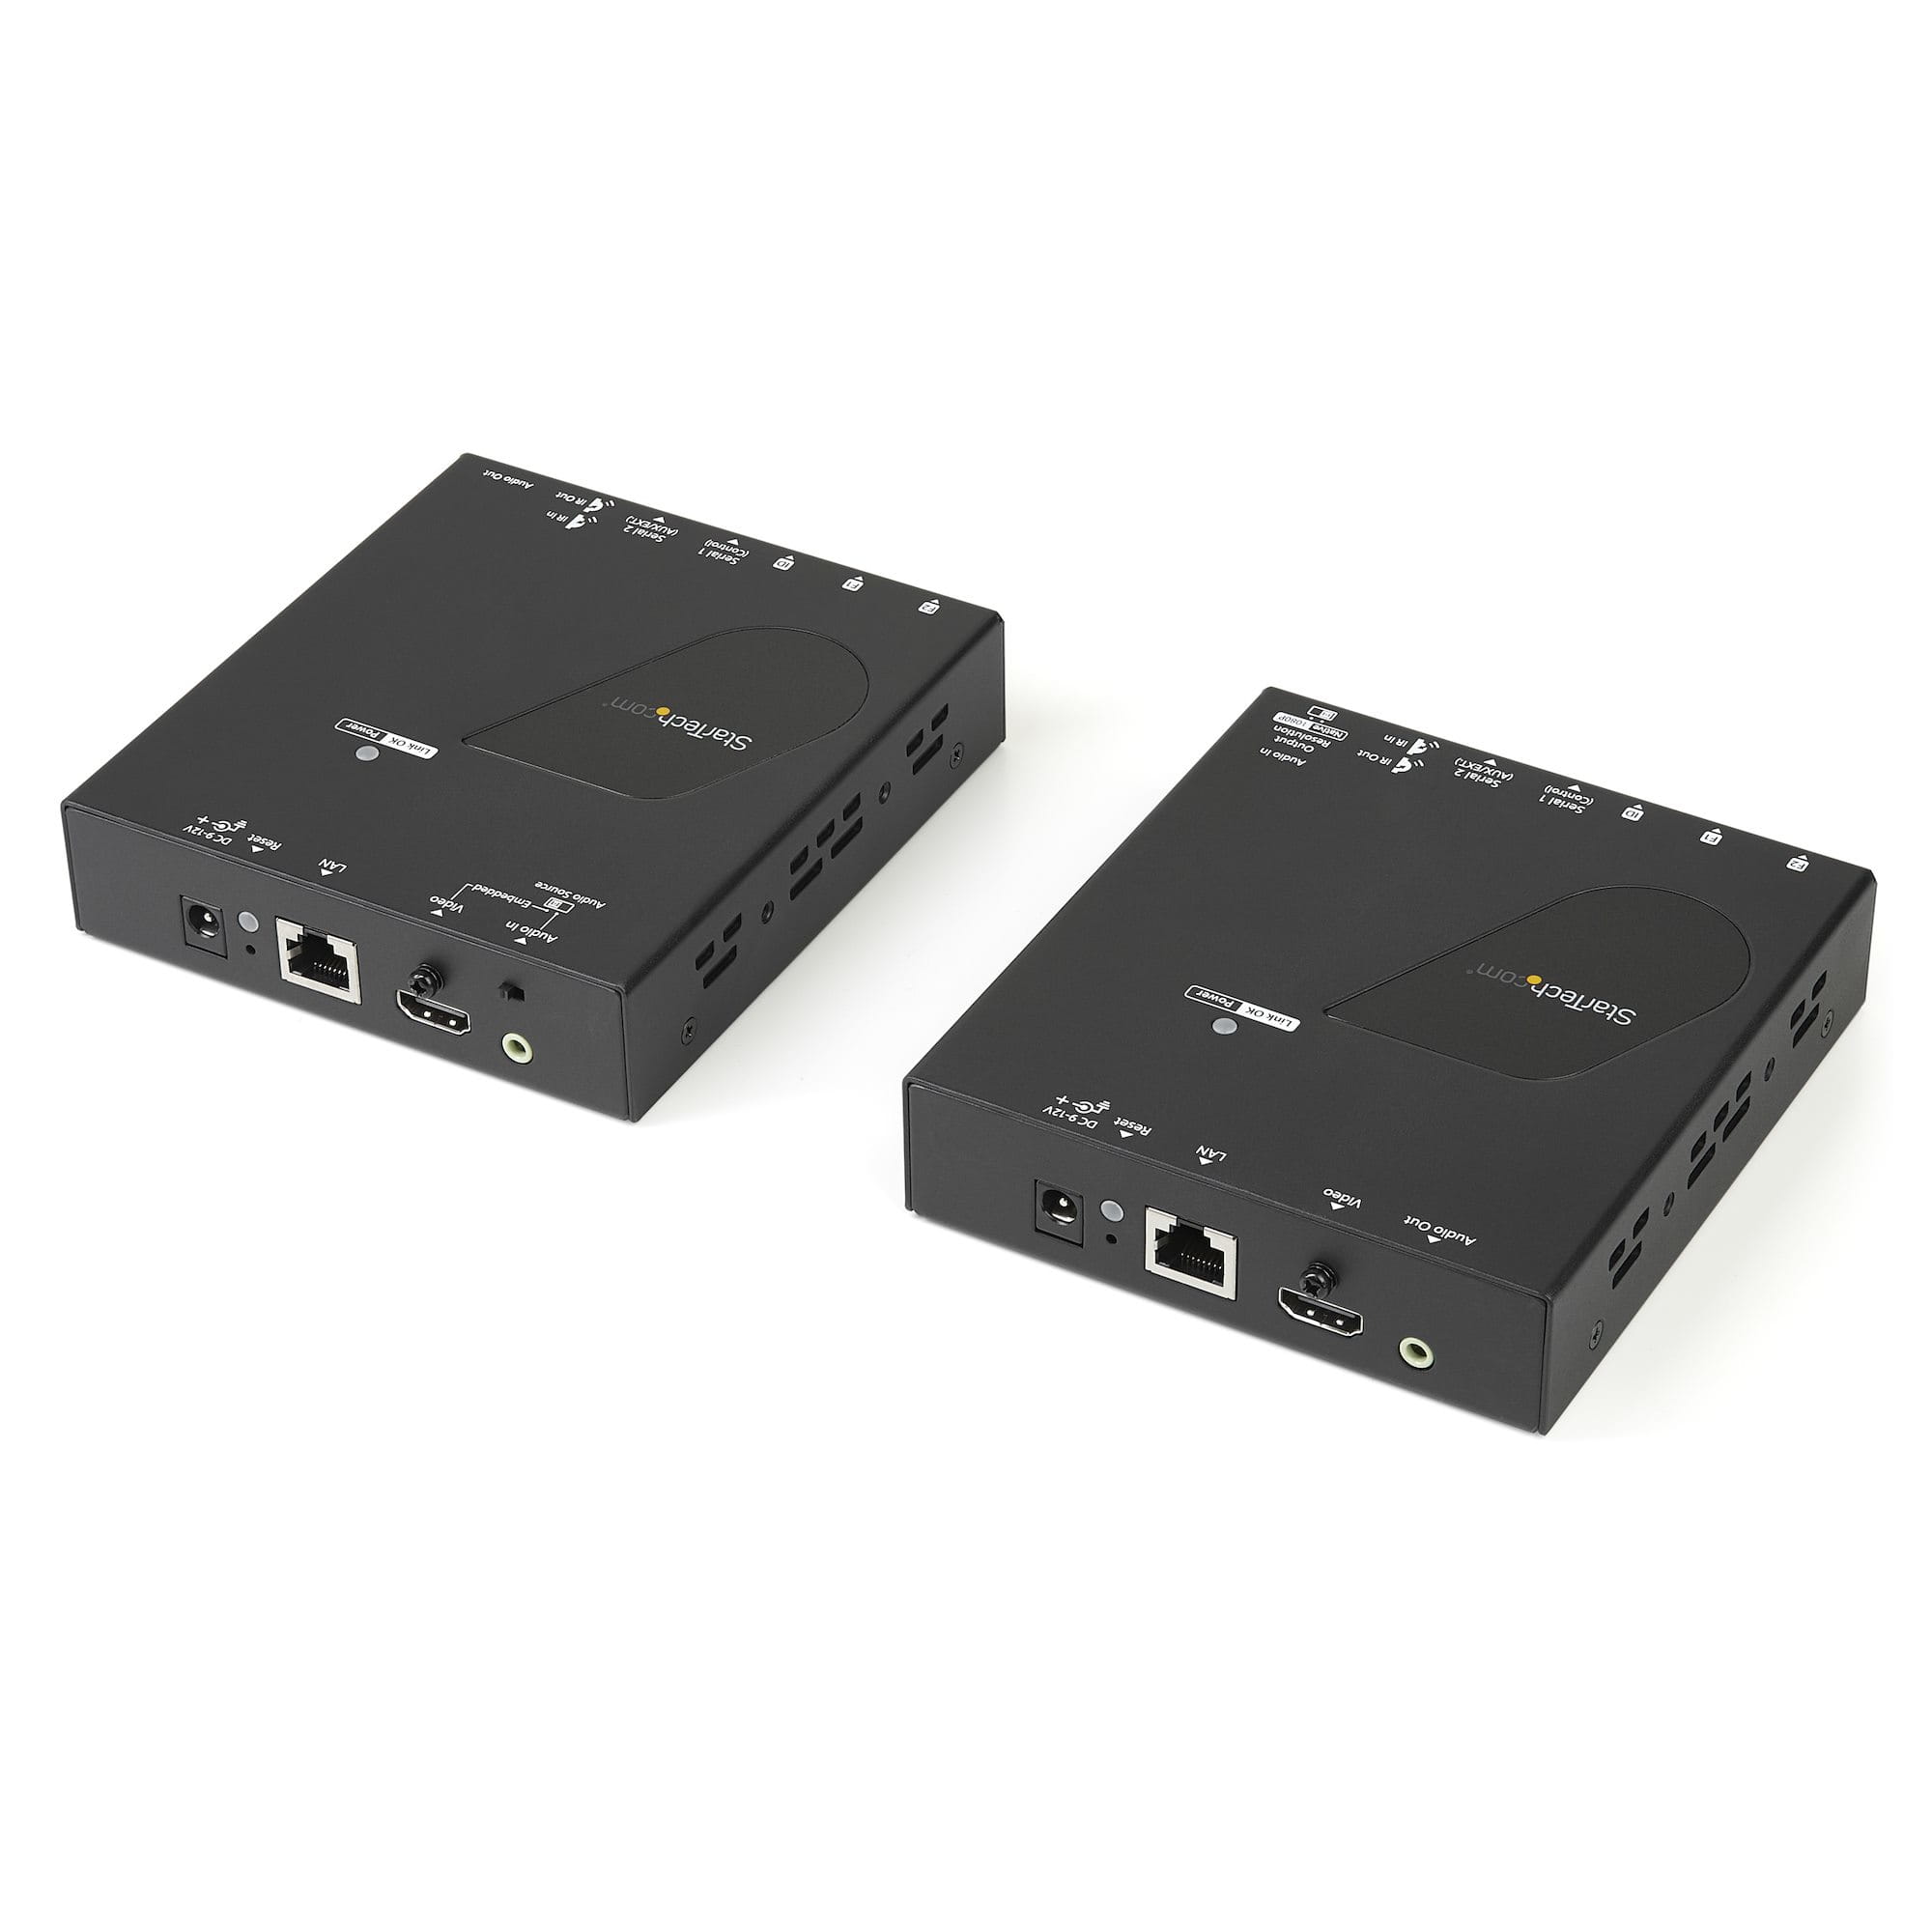 StarTech.com HDMI über IP Extender Kit - Video over IP Externeder mit Videowand unterstützung